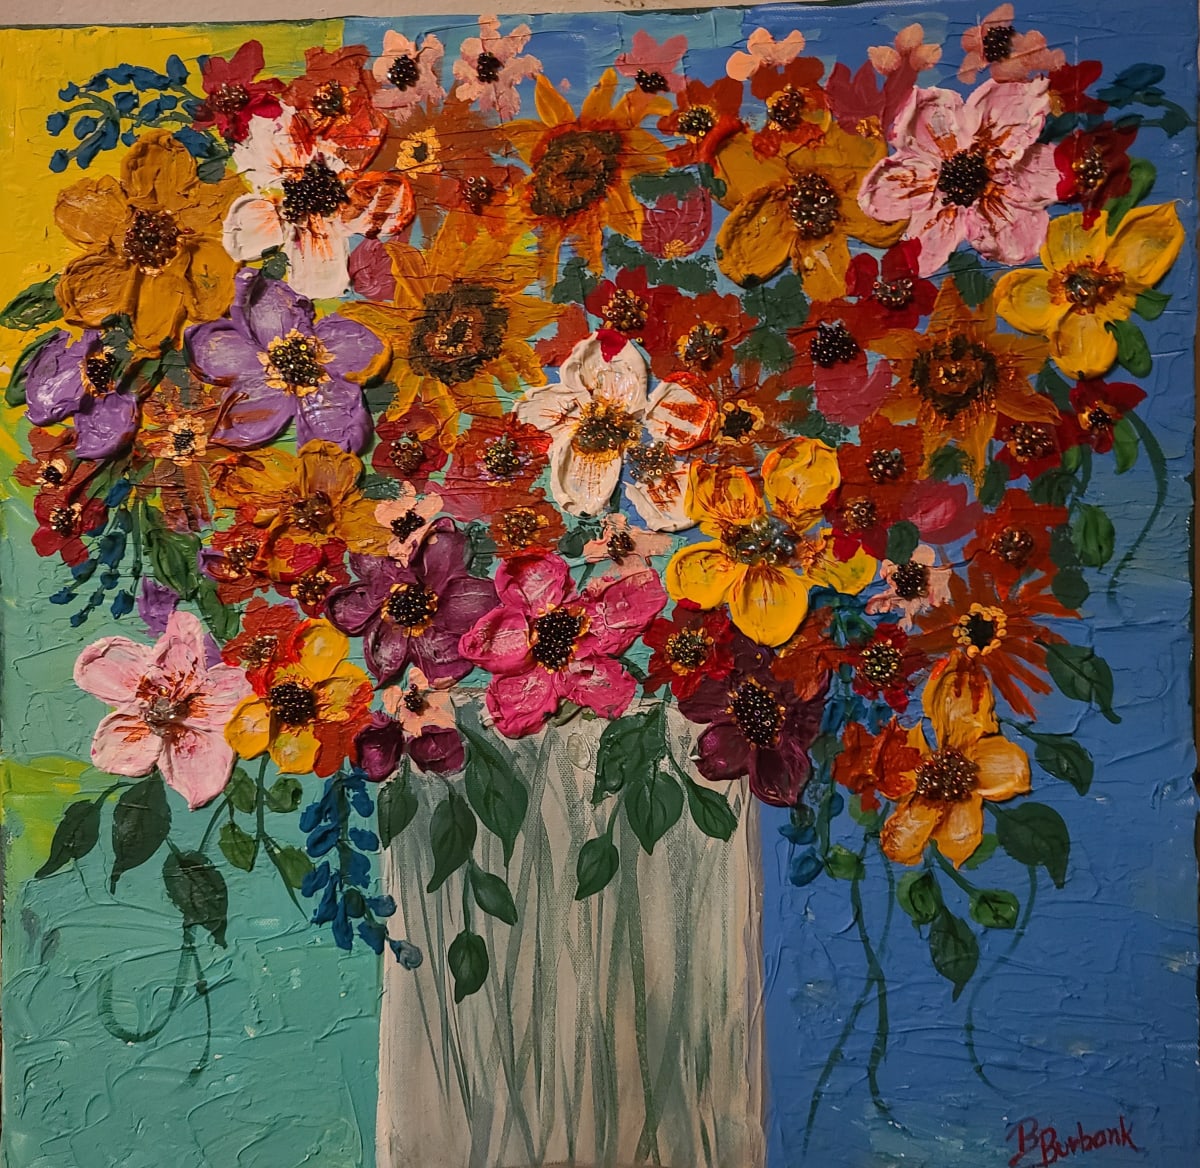 Palette of Flowers by Bonnie Burbank 